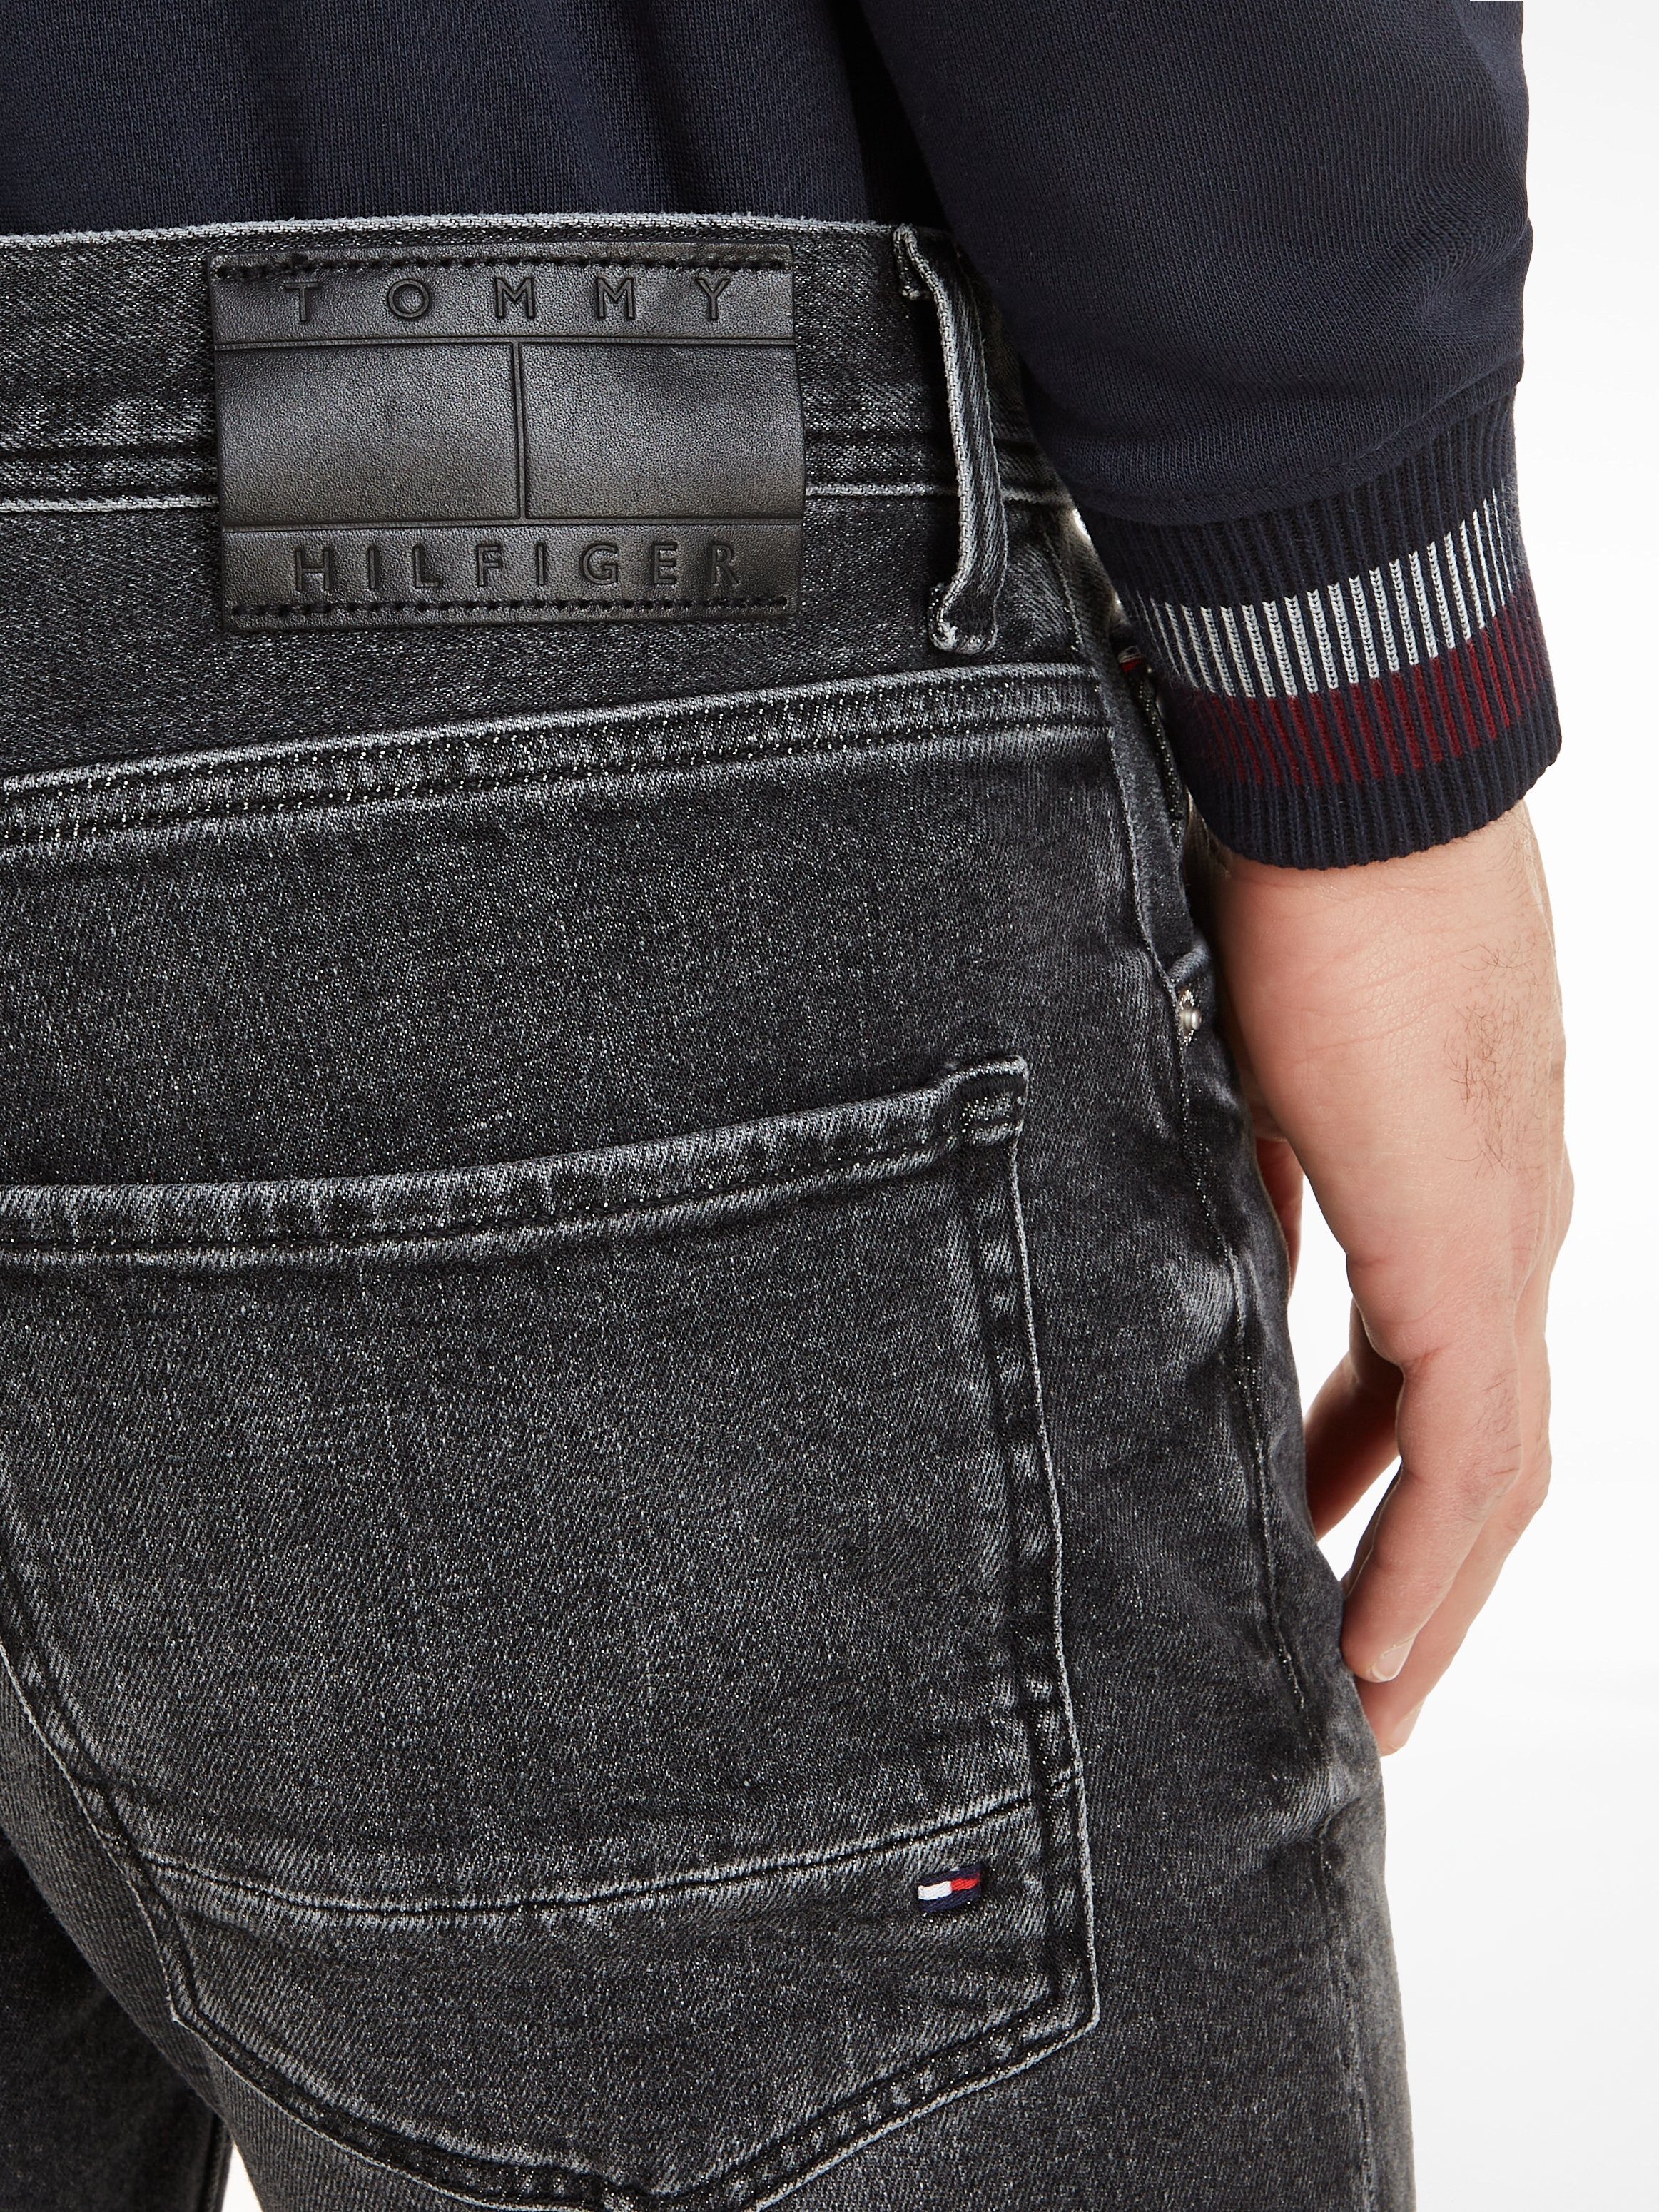 Straight-Jeans STRAIGHT grey Hilfiger STR elgin Tommy DENTON